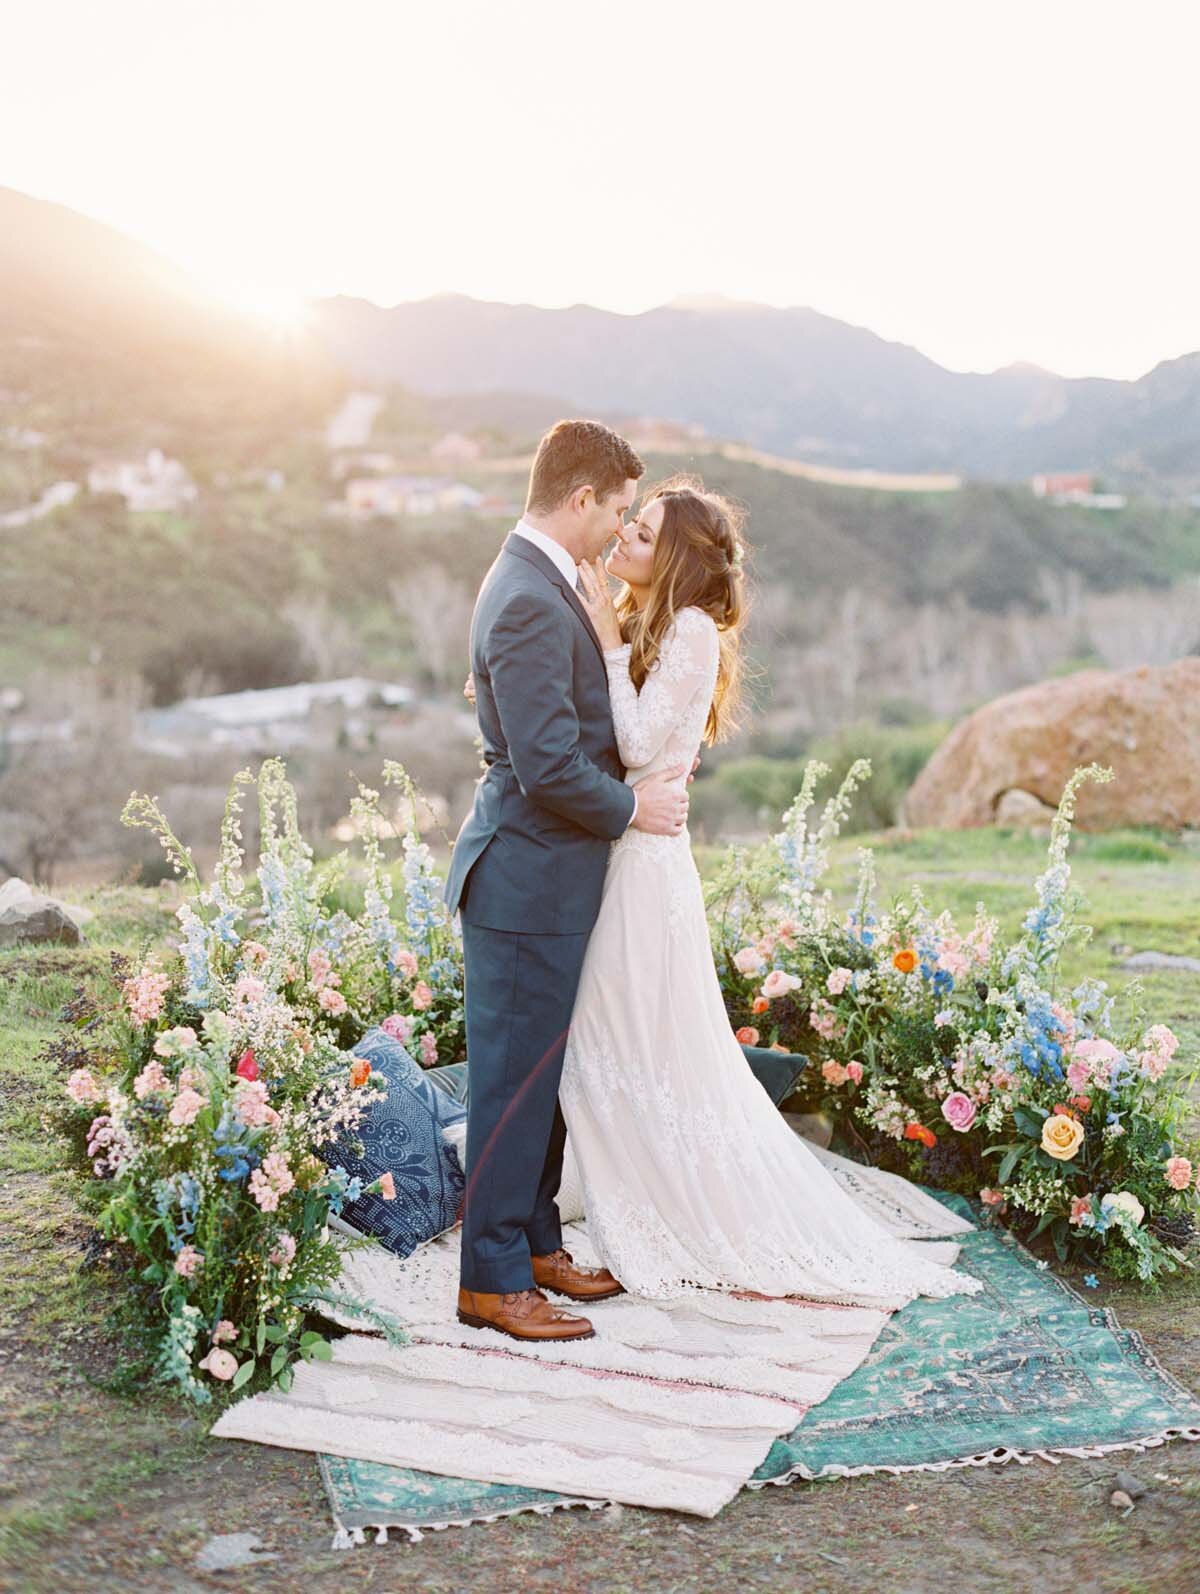 wisteria-photography.com | Wisteria Photography | Triunfo Creek Vineyards Weddings | Southern California Editorial Film Photographer  (18).jpg